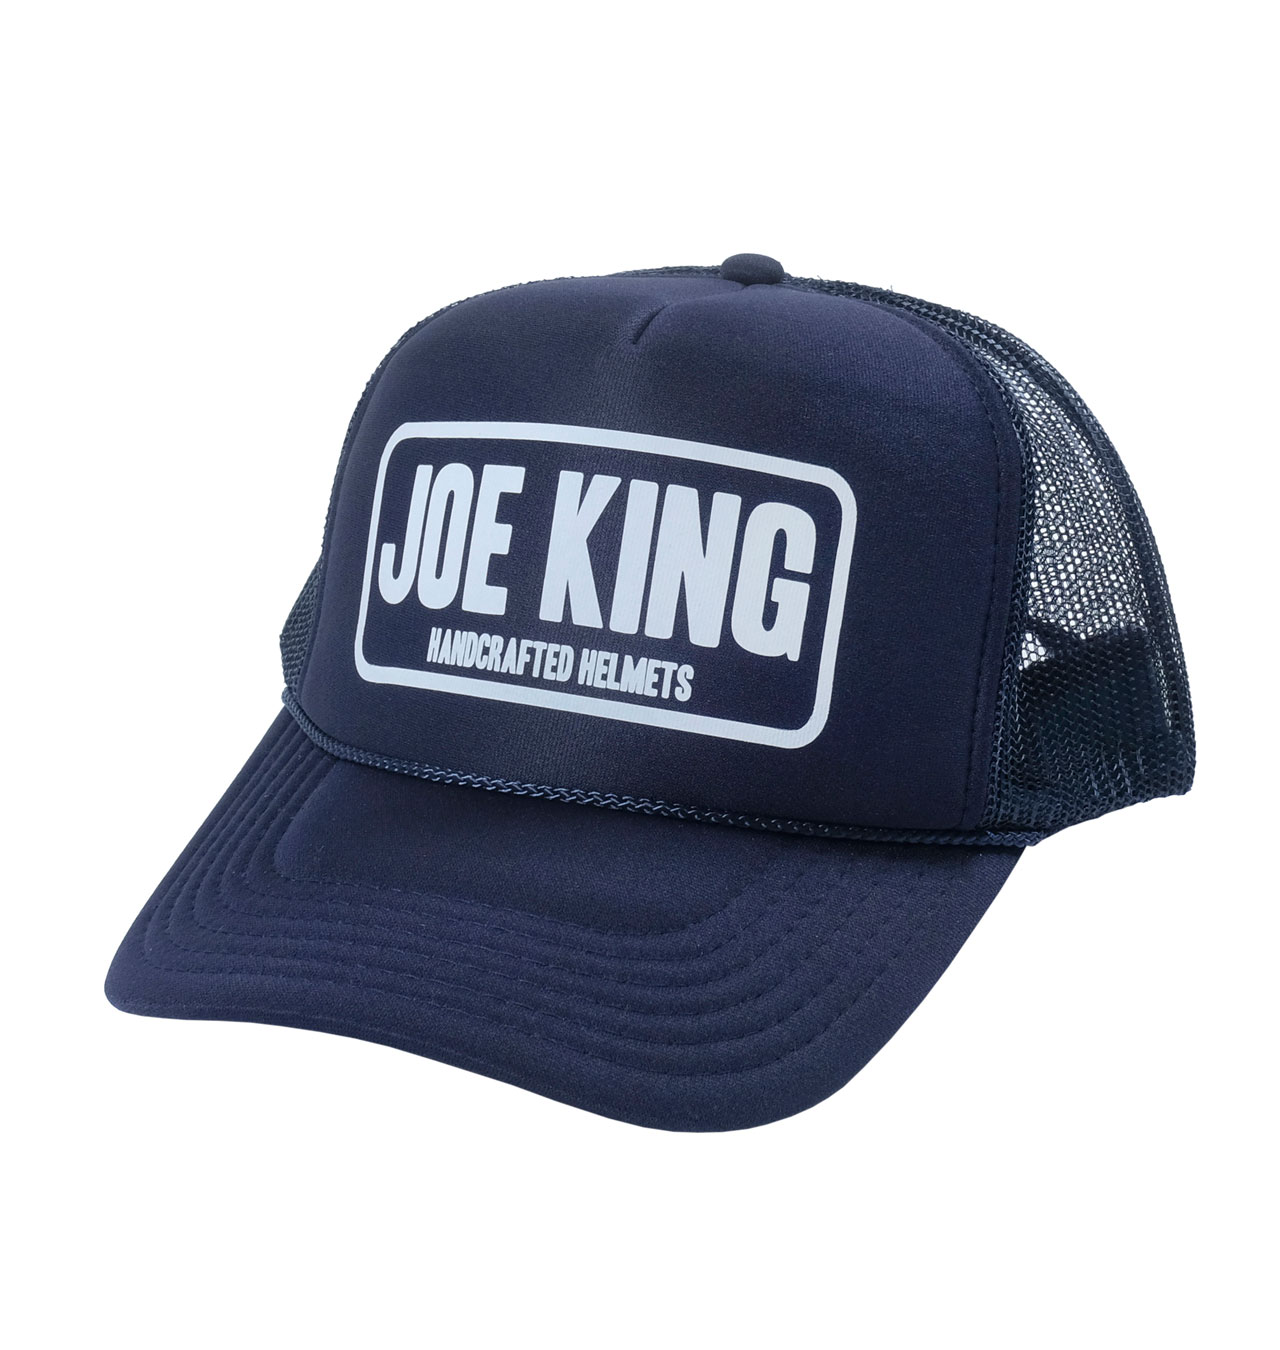 Joe King - JK Handcrafted Helmets Cap - Navy